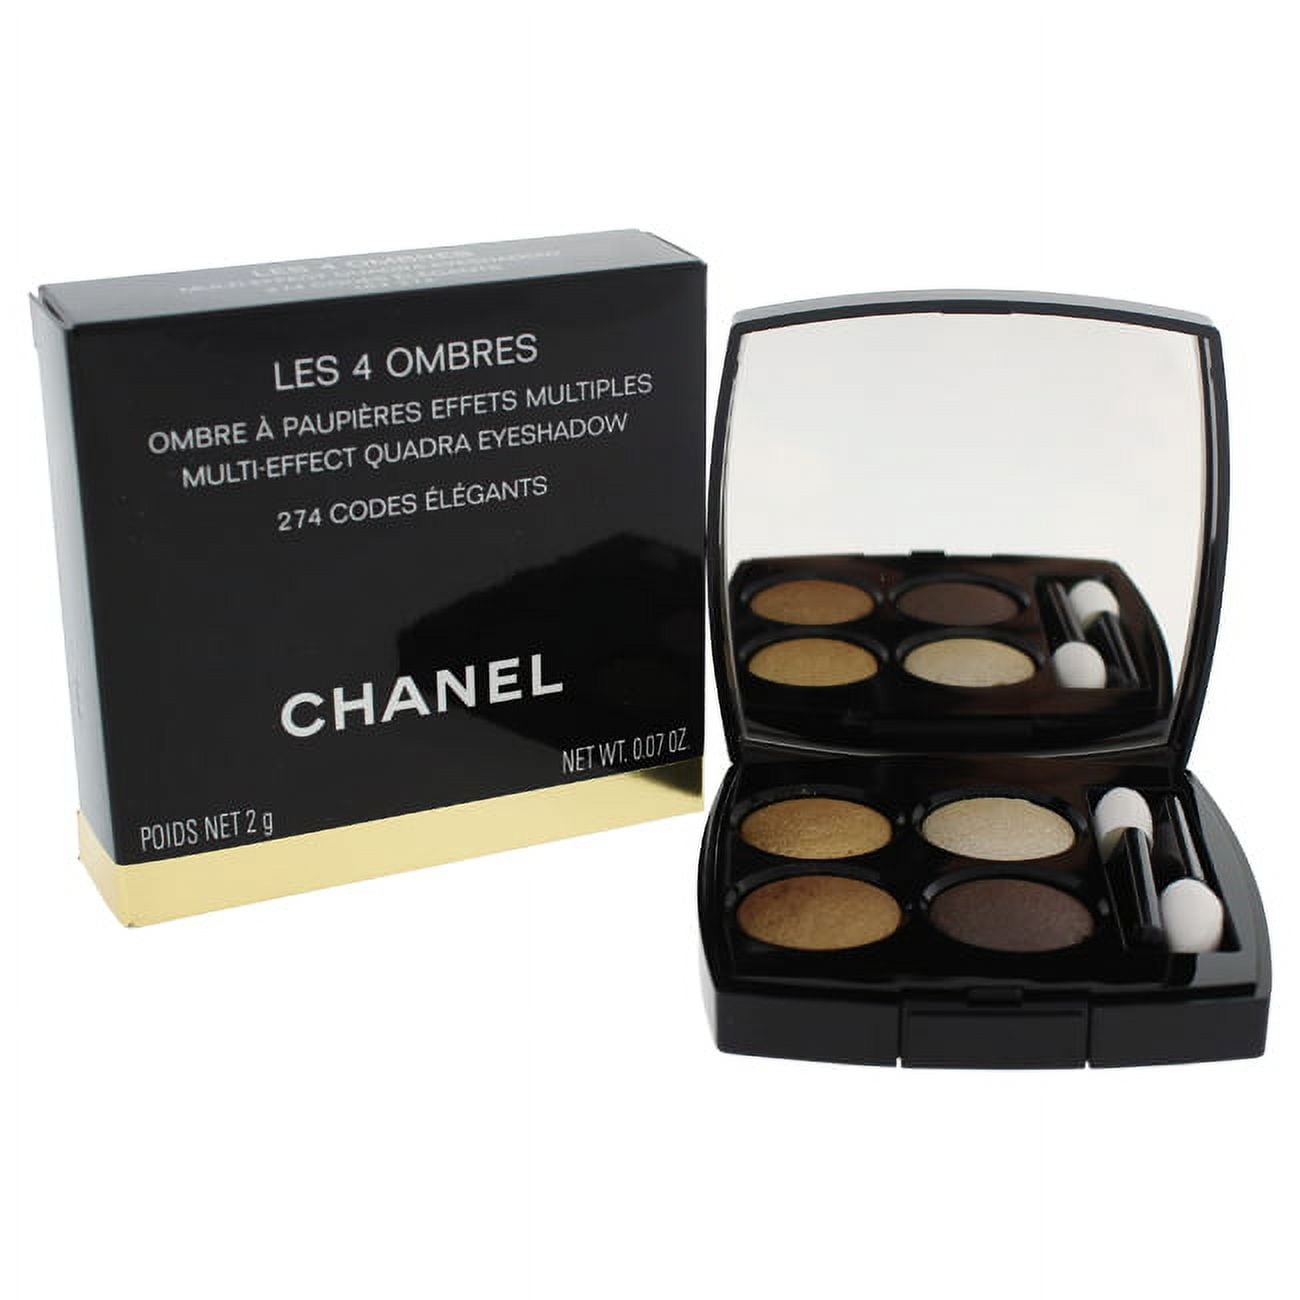 Chanel Les 4 Ombres Multi-Effect Quadra Eyeshadow - # 274 Codes Elegants  0.07 oz Eyeshadow